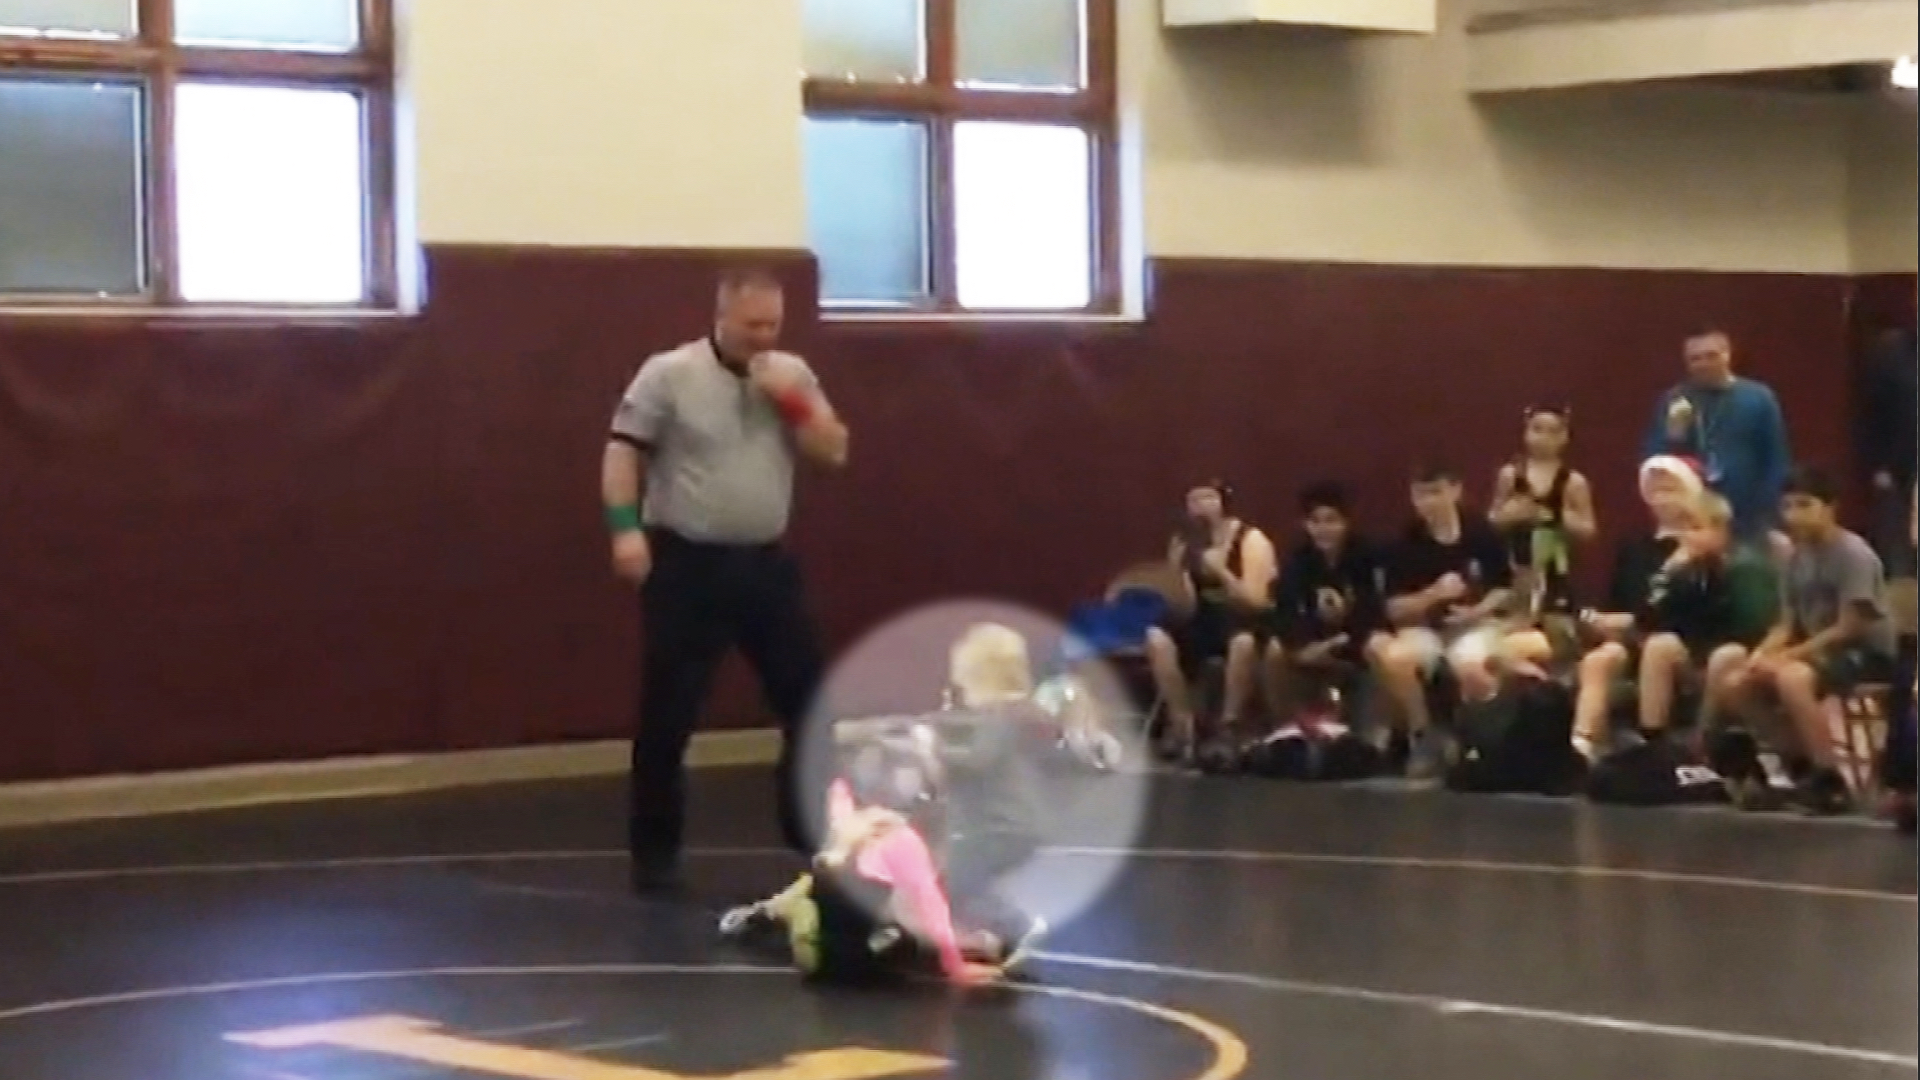 Little boy jumps into sister's wrestling match - CNN Video